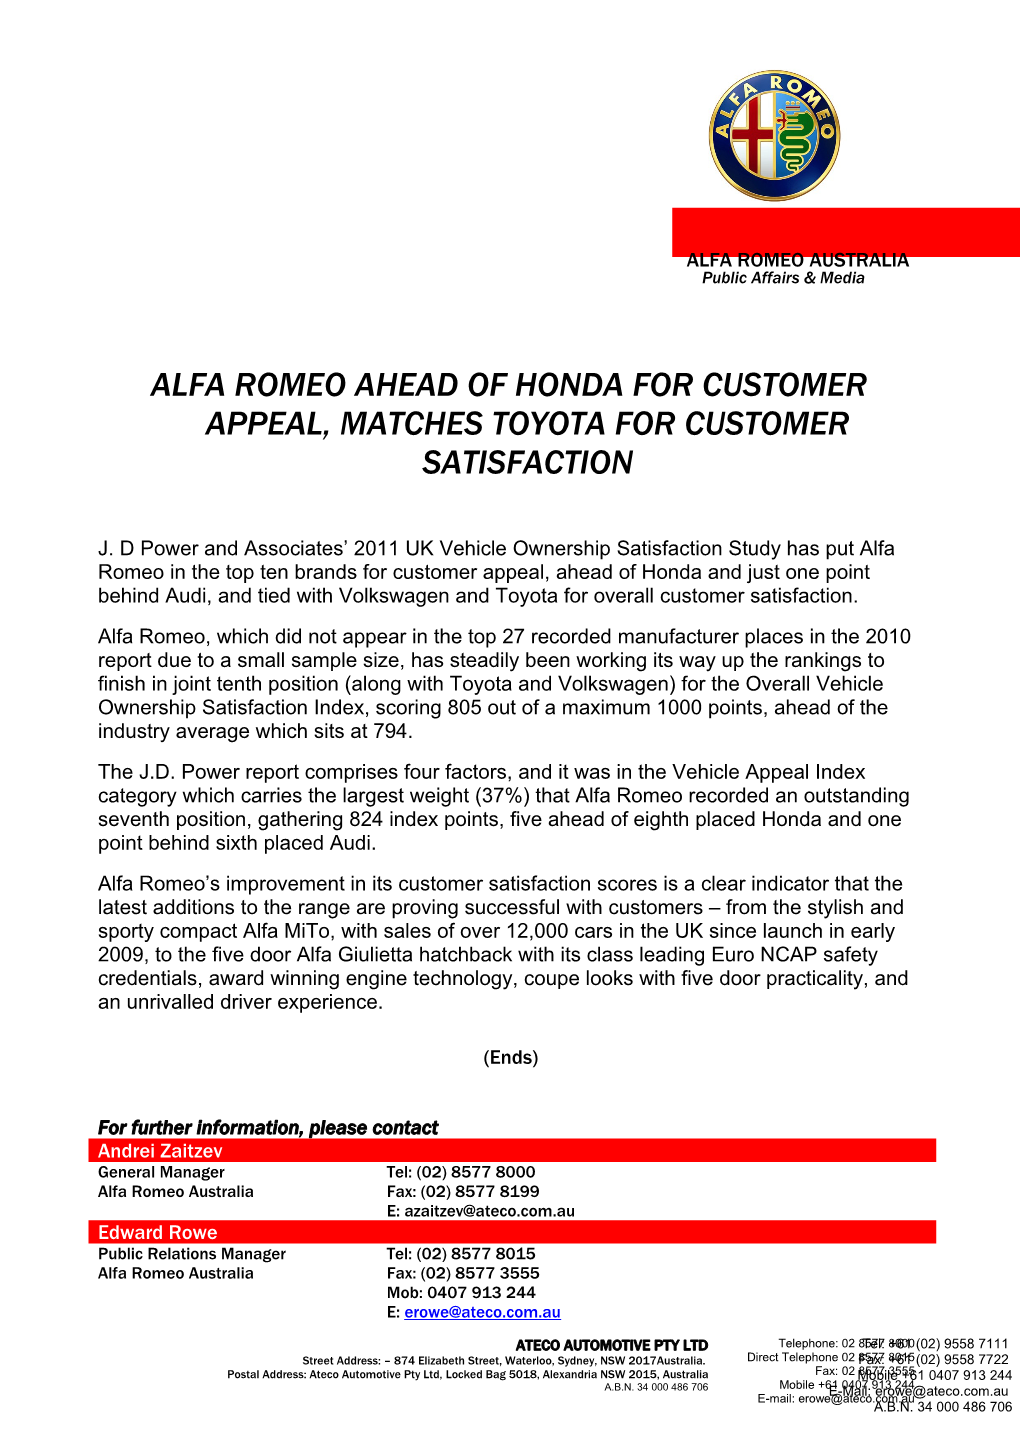 Alfa Romeo Ahead of Honda for Customer Appeal, Matches Toyota for Customer Satisfaction